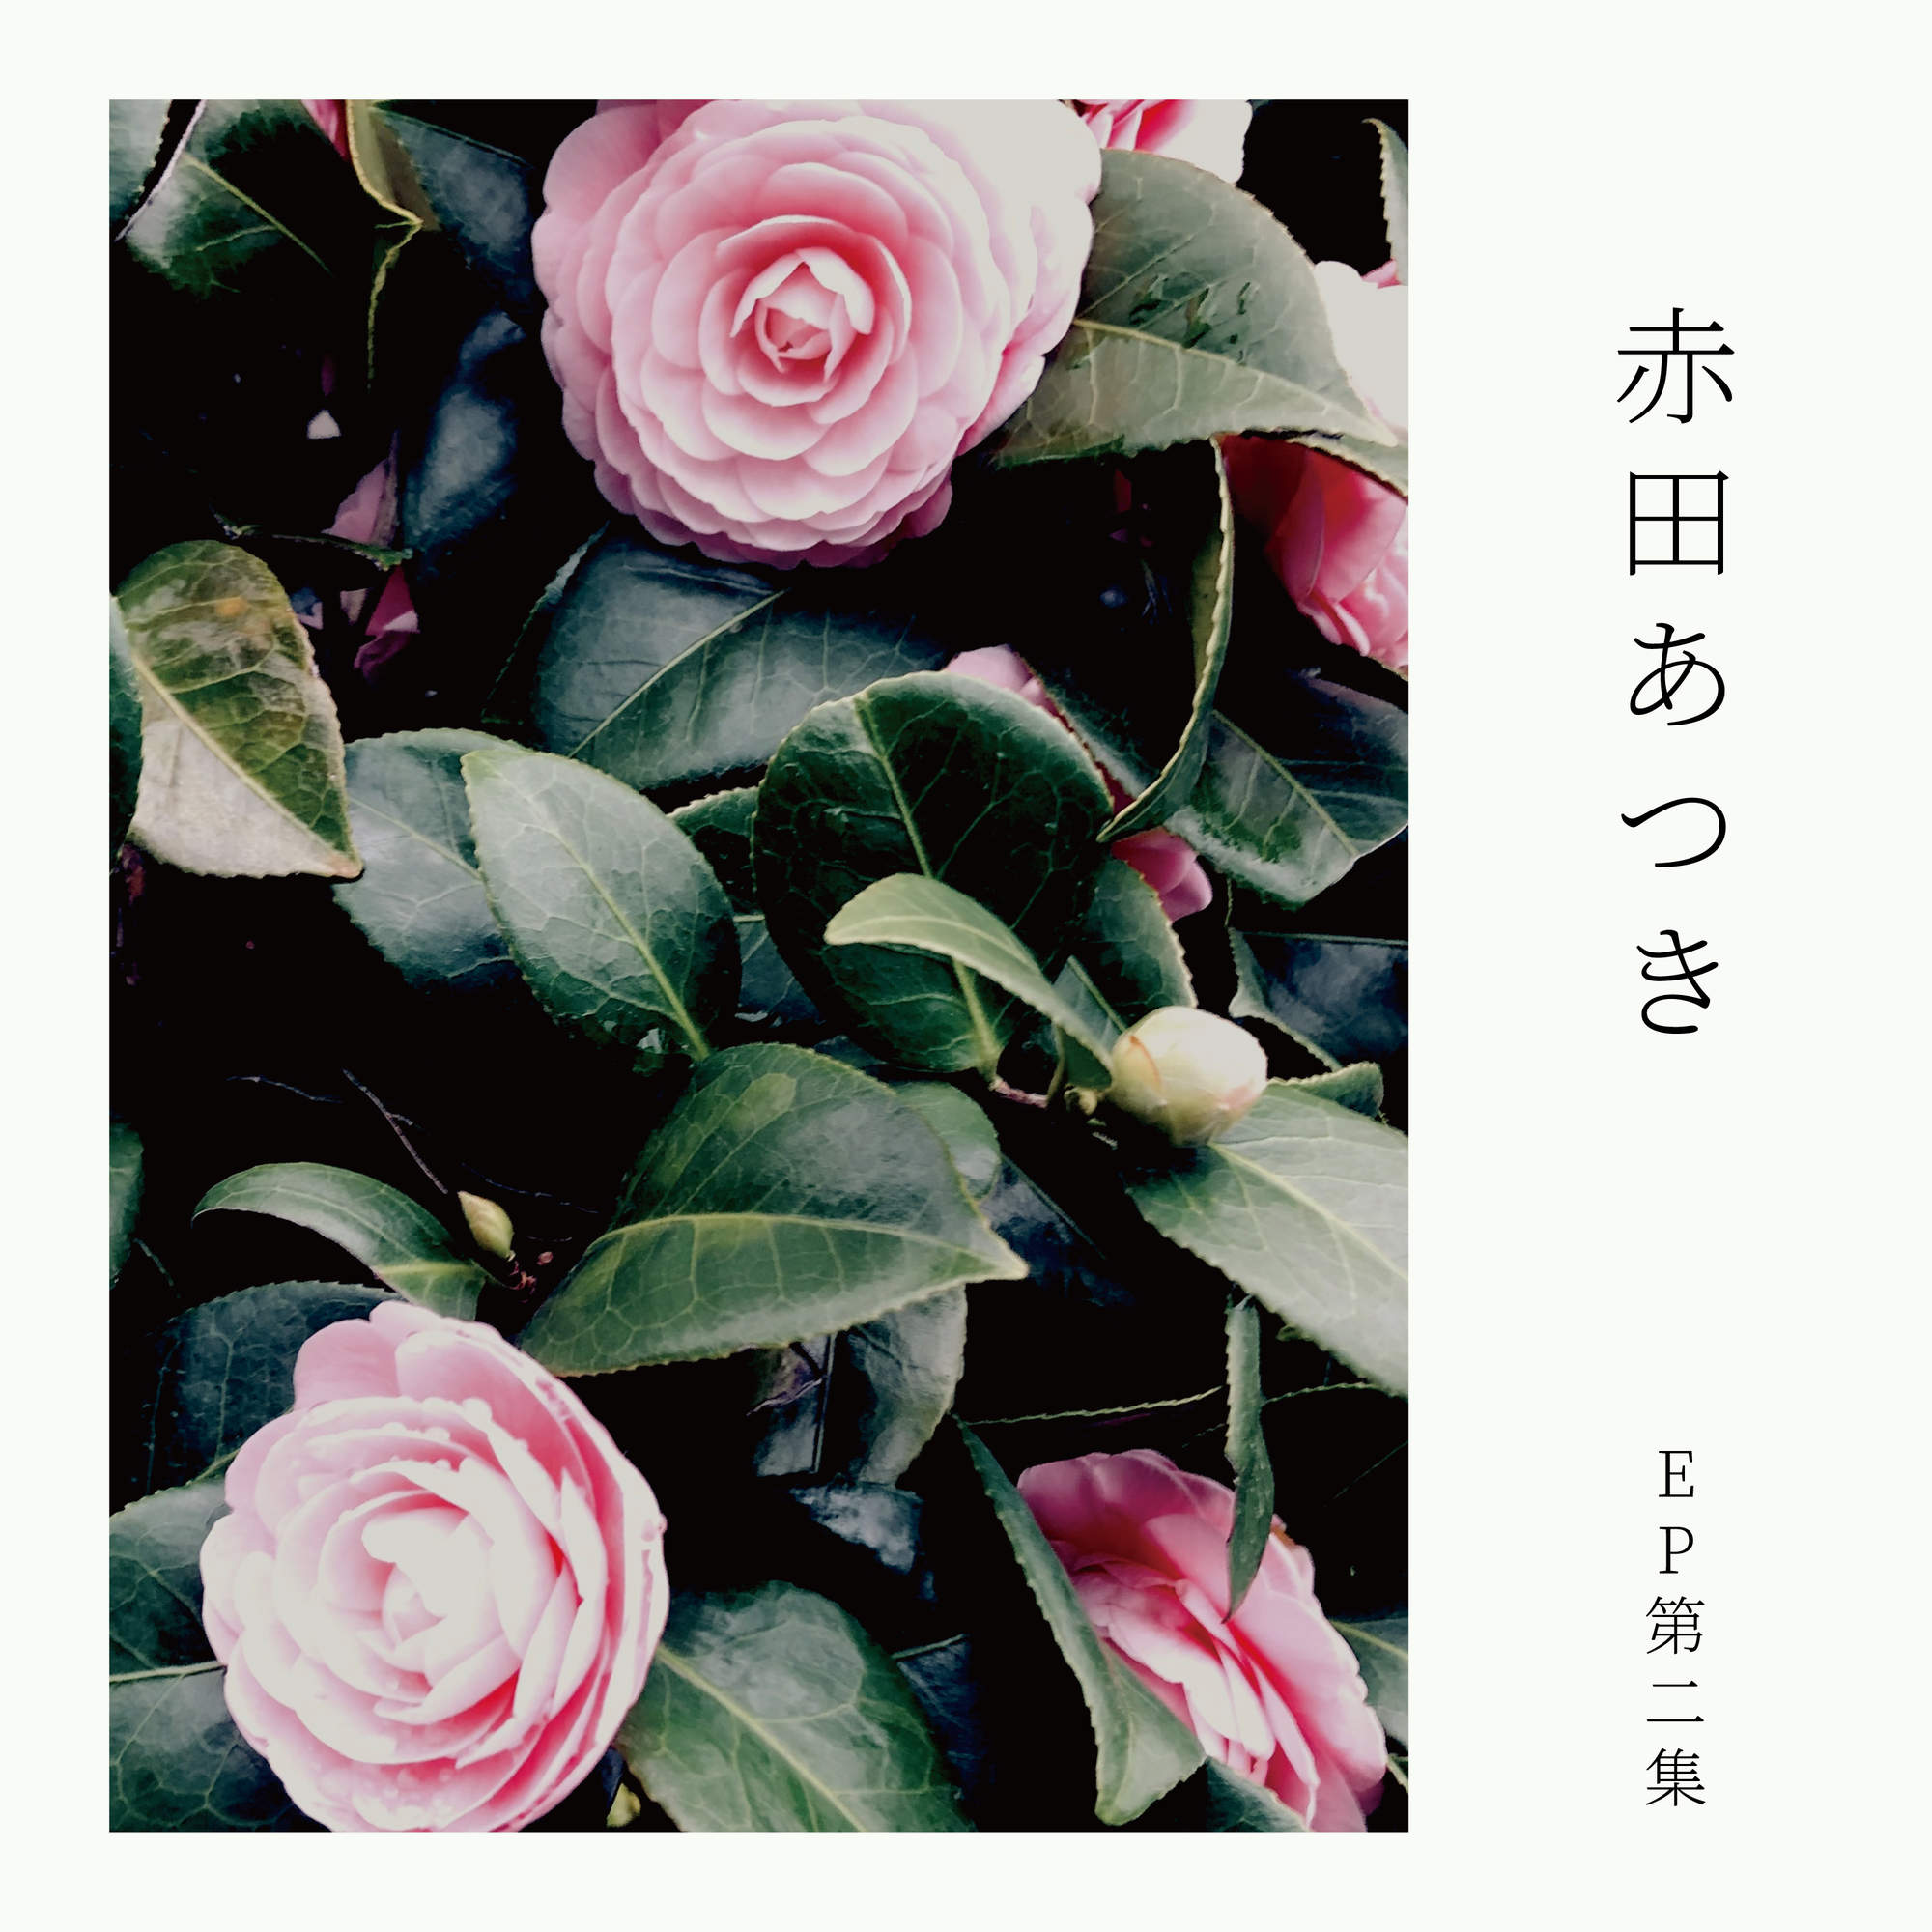 http://rose-records.jp/files/20230518185849.jpg